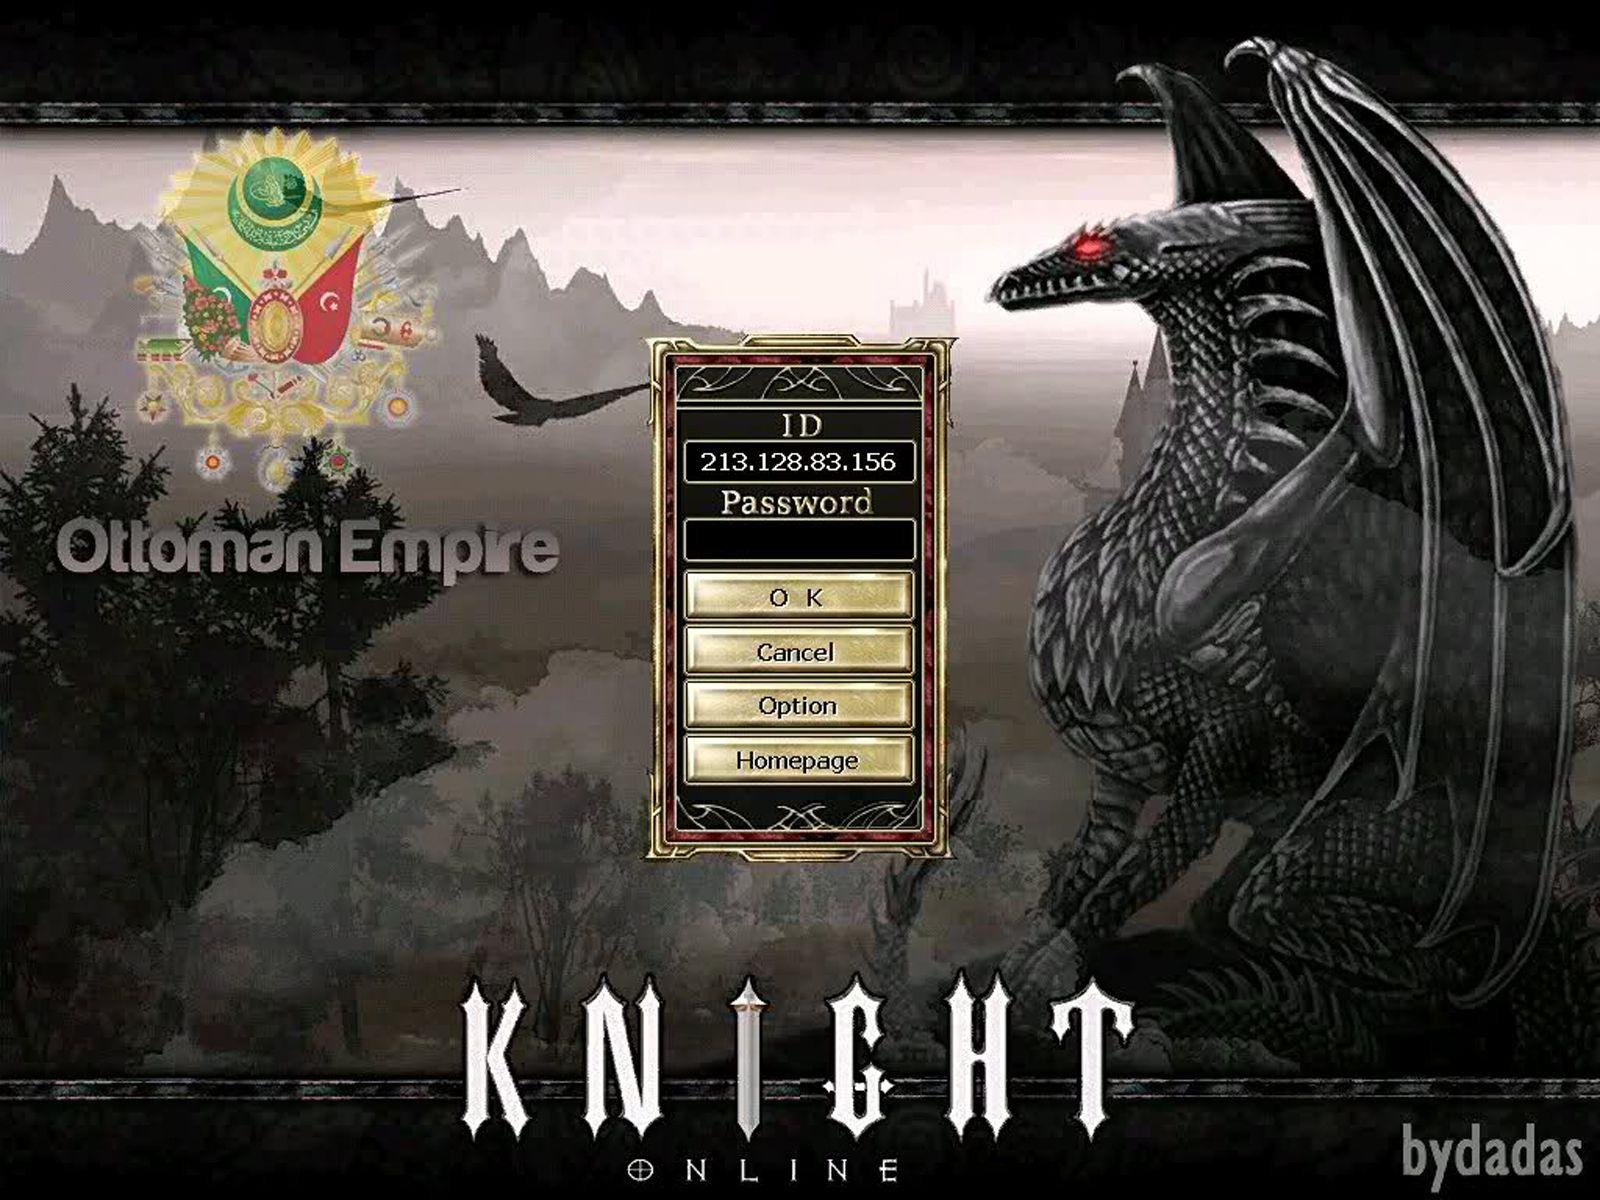 Download Wallpaperfree: Knight Online Games HD Wallpaper